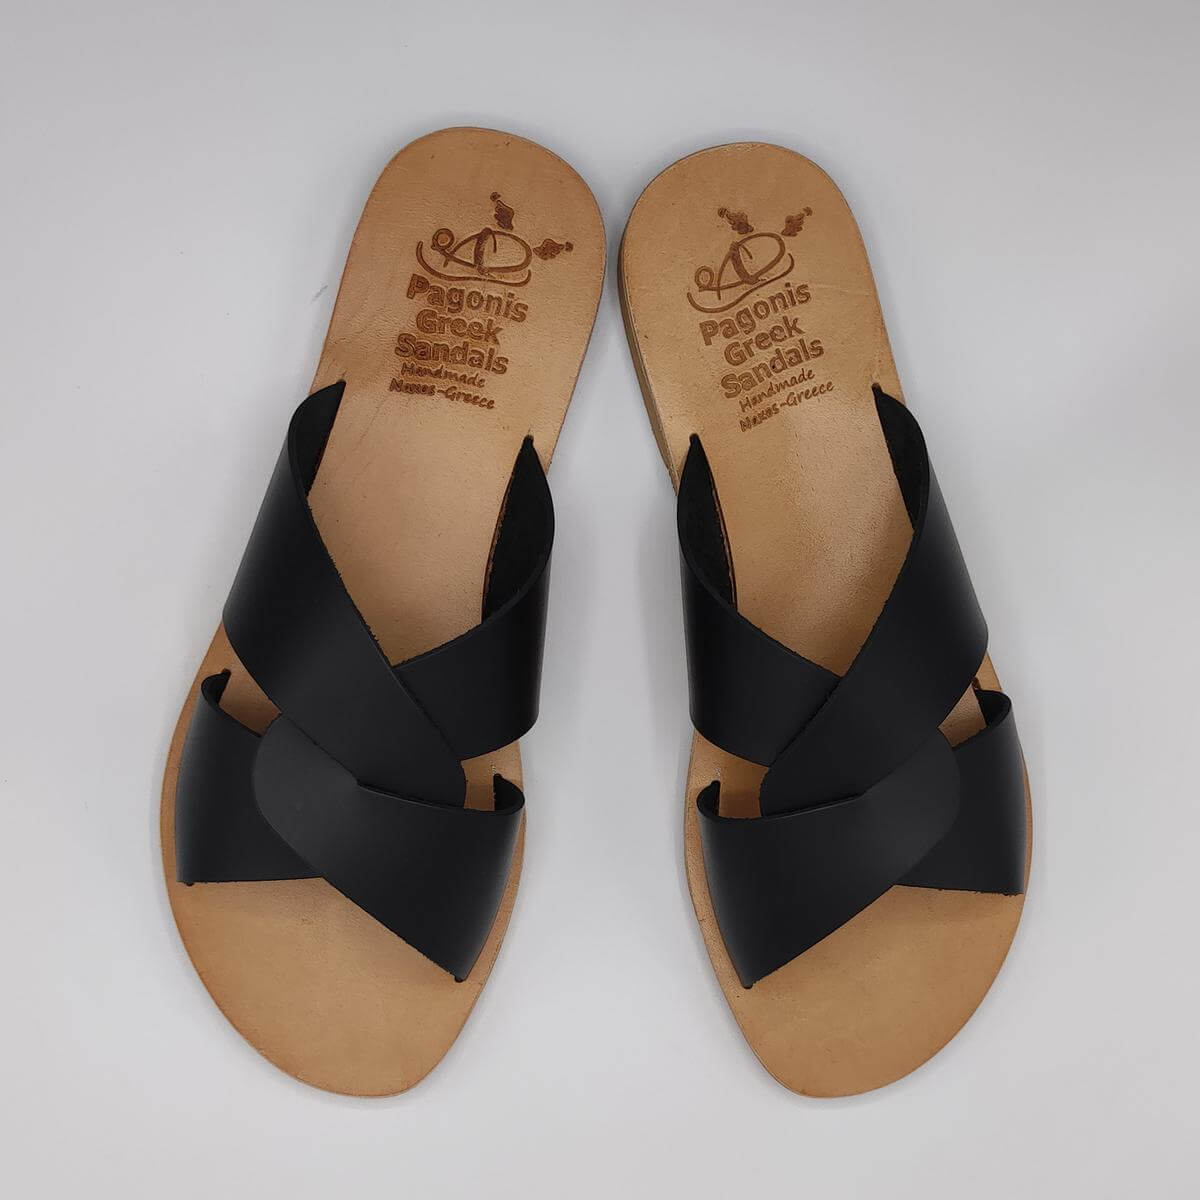 Desmos Leather Sandal Pagonis Greek-Sandals Black